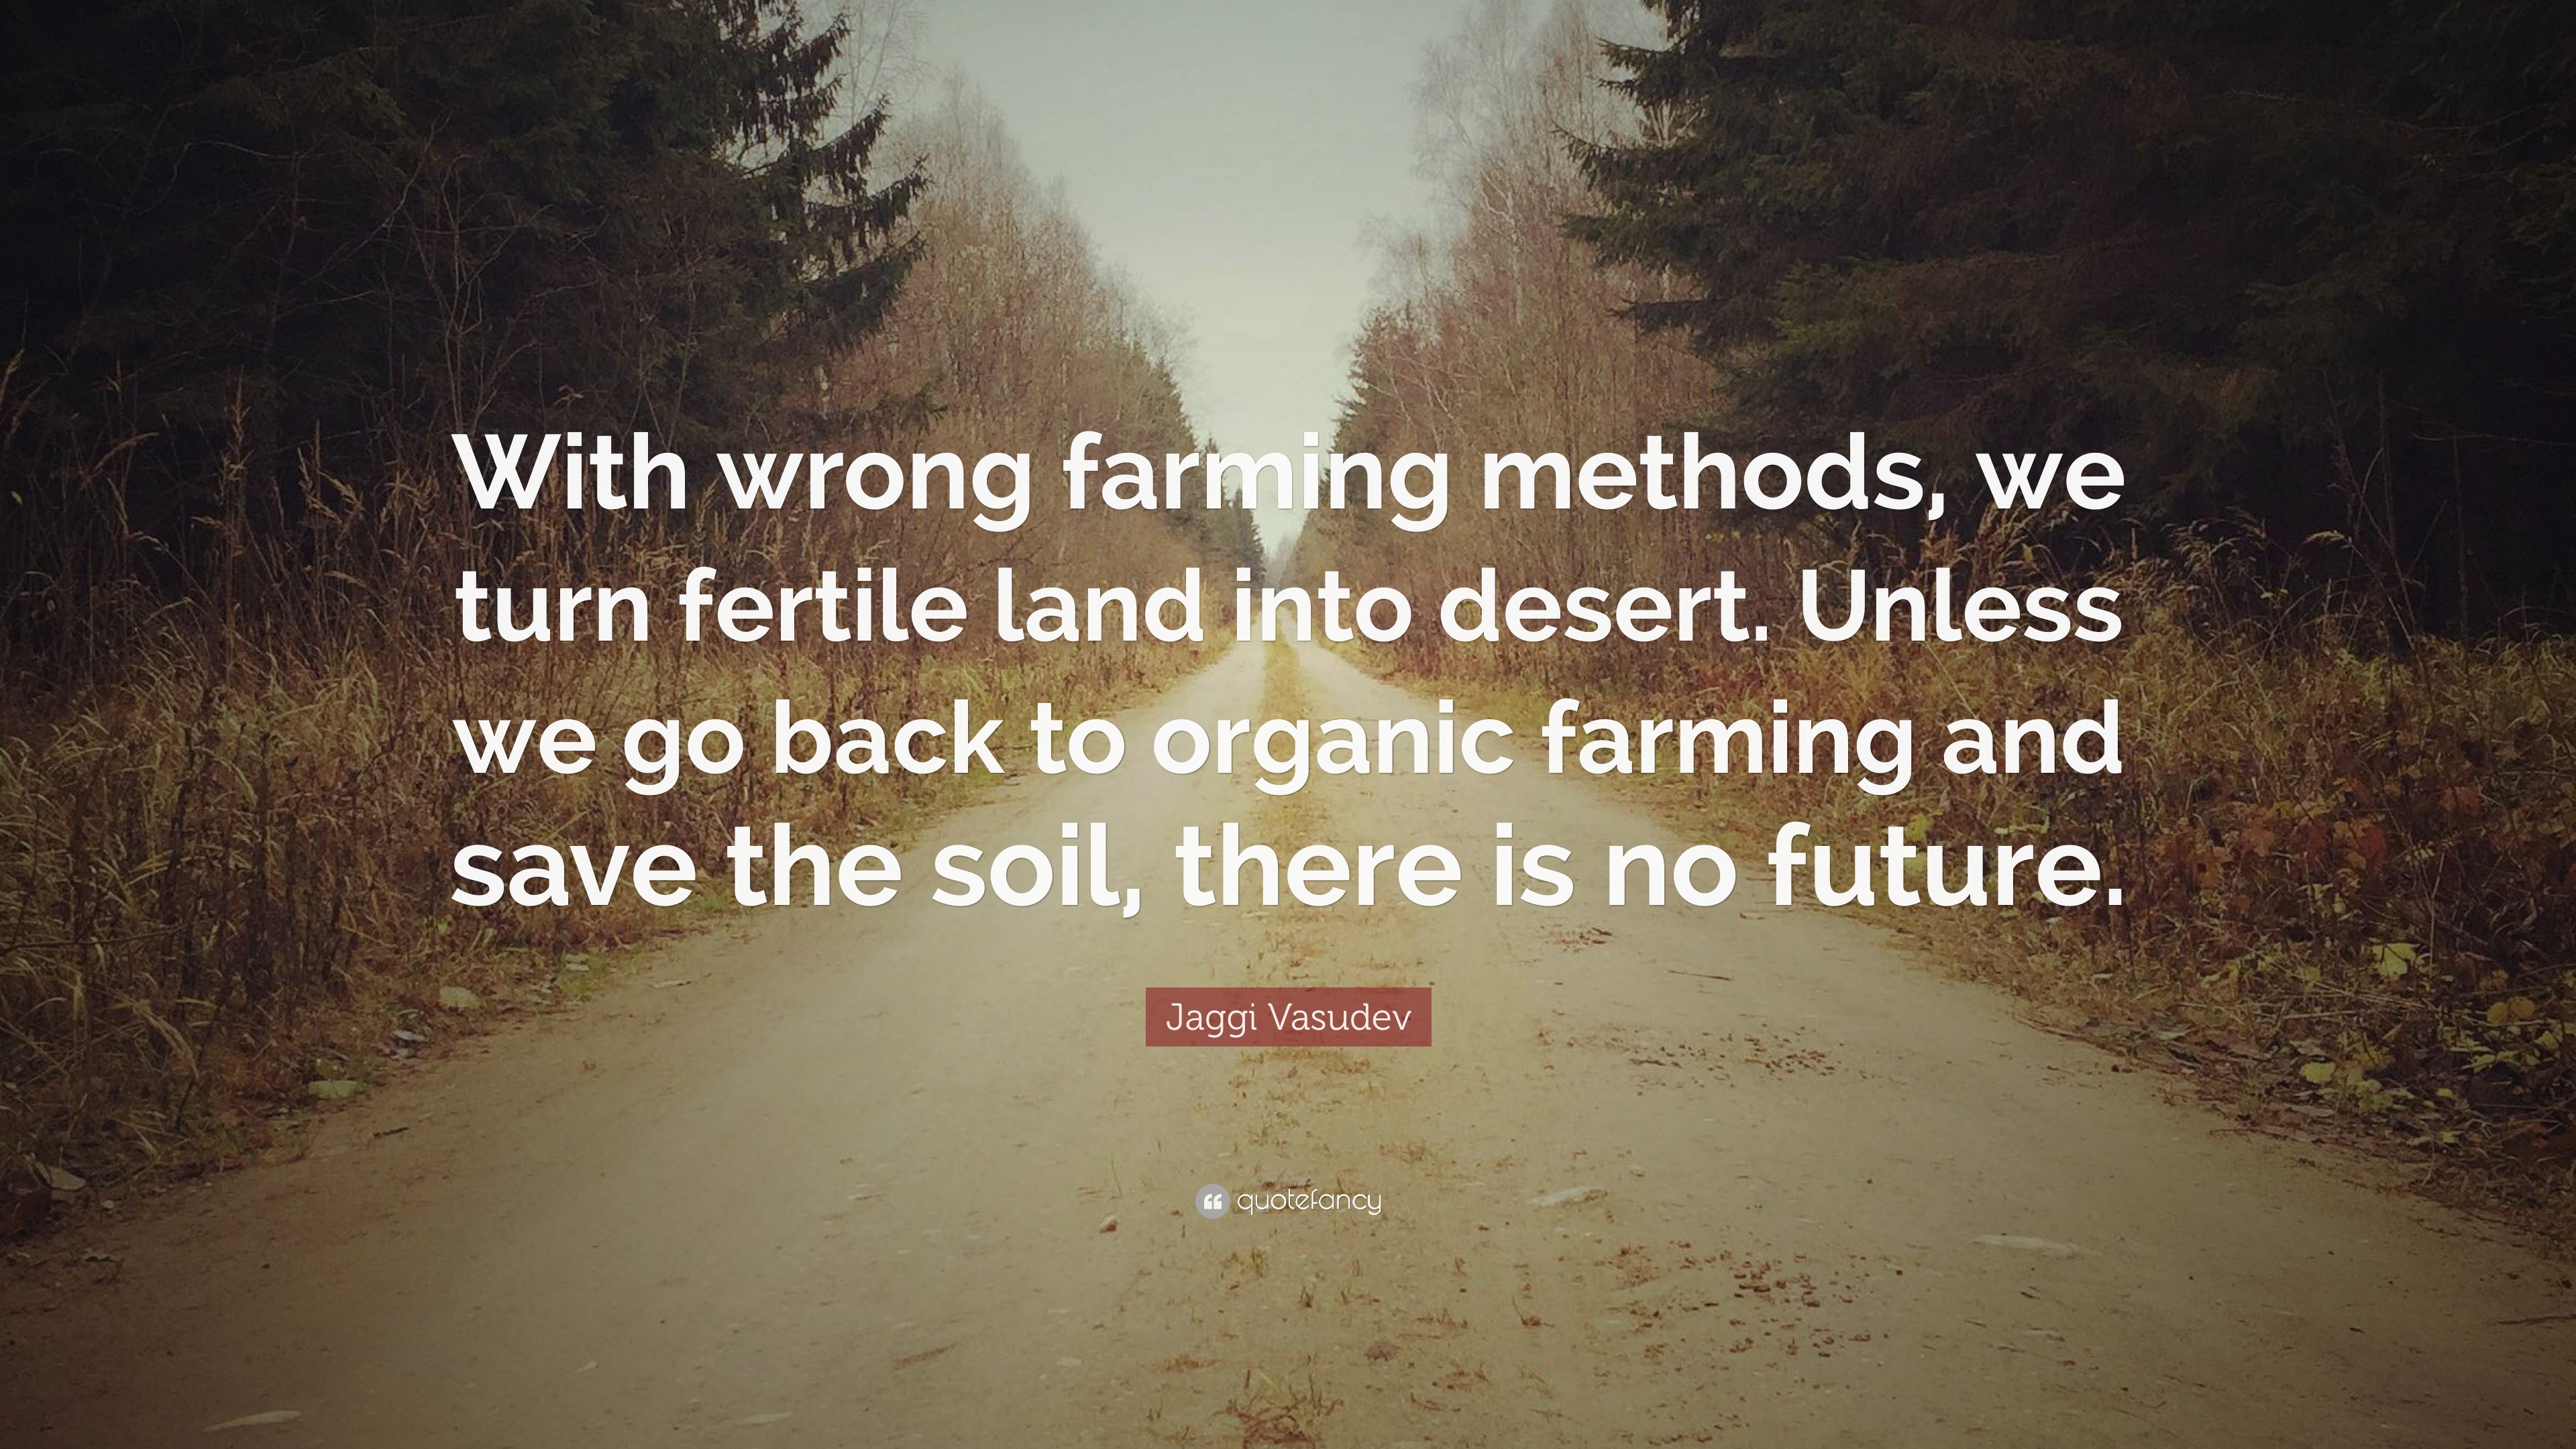 Jaggi Vasudev Quote: “With wrong farming methods, we turn fertile land